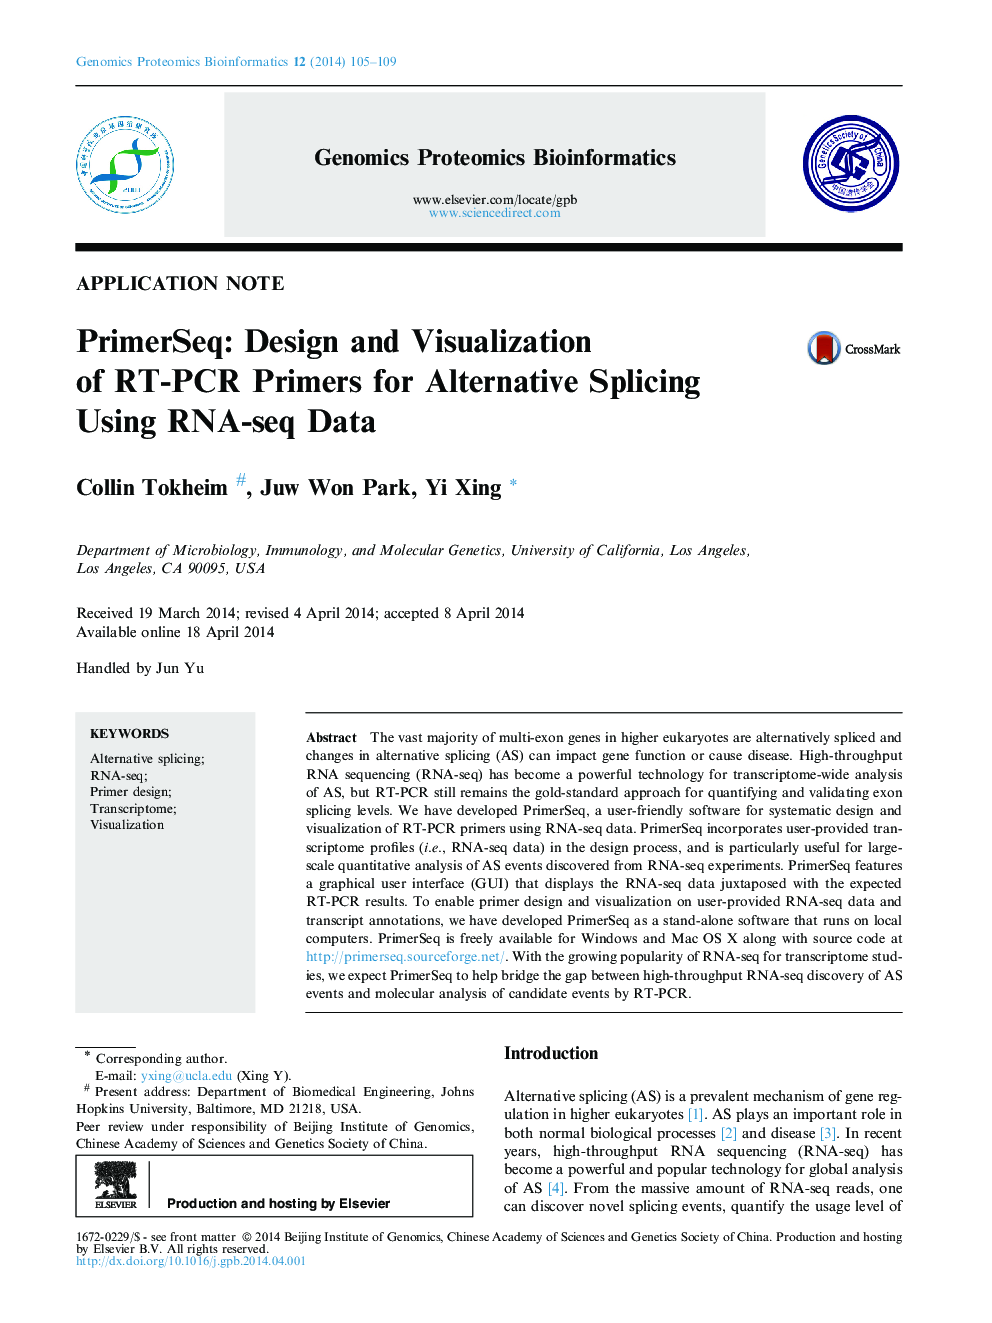 PrimerSeq: Design and Visualization of RT-PCR Primers for Alternative Splicing Using RNA-seq Data 